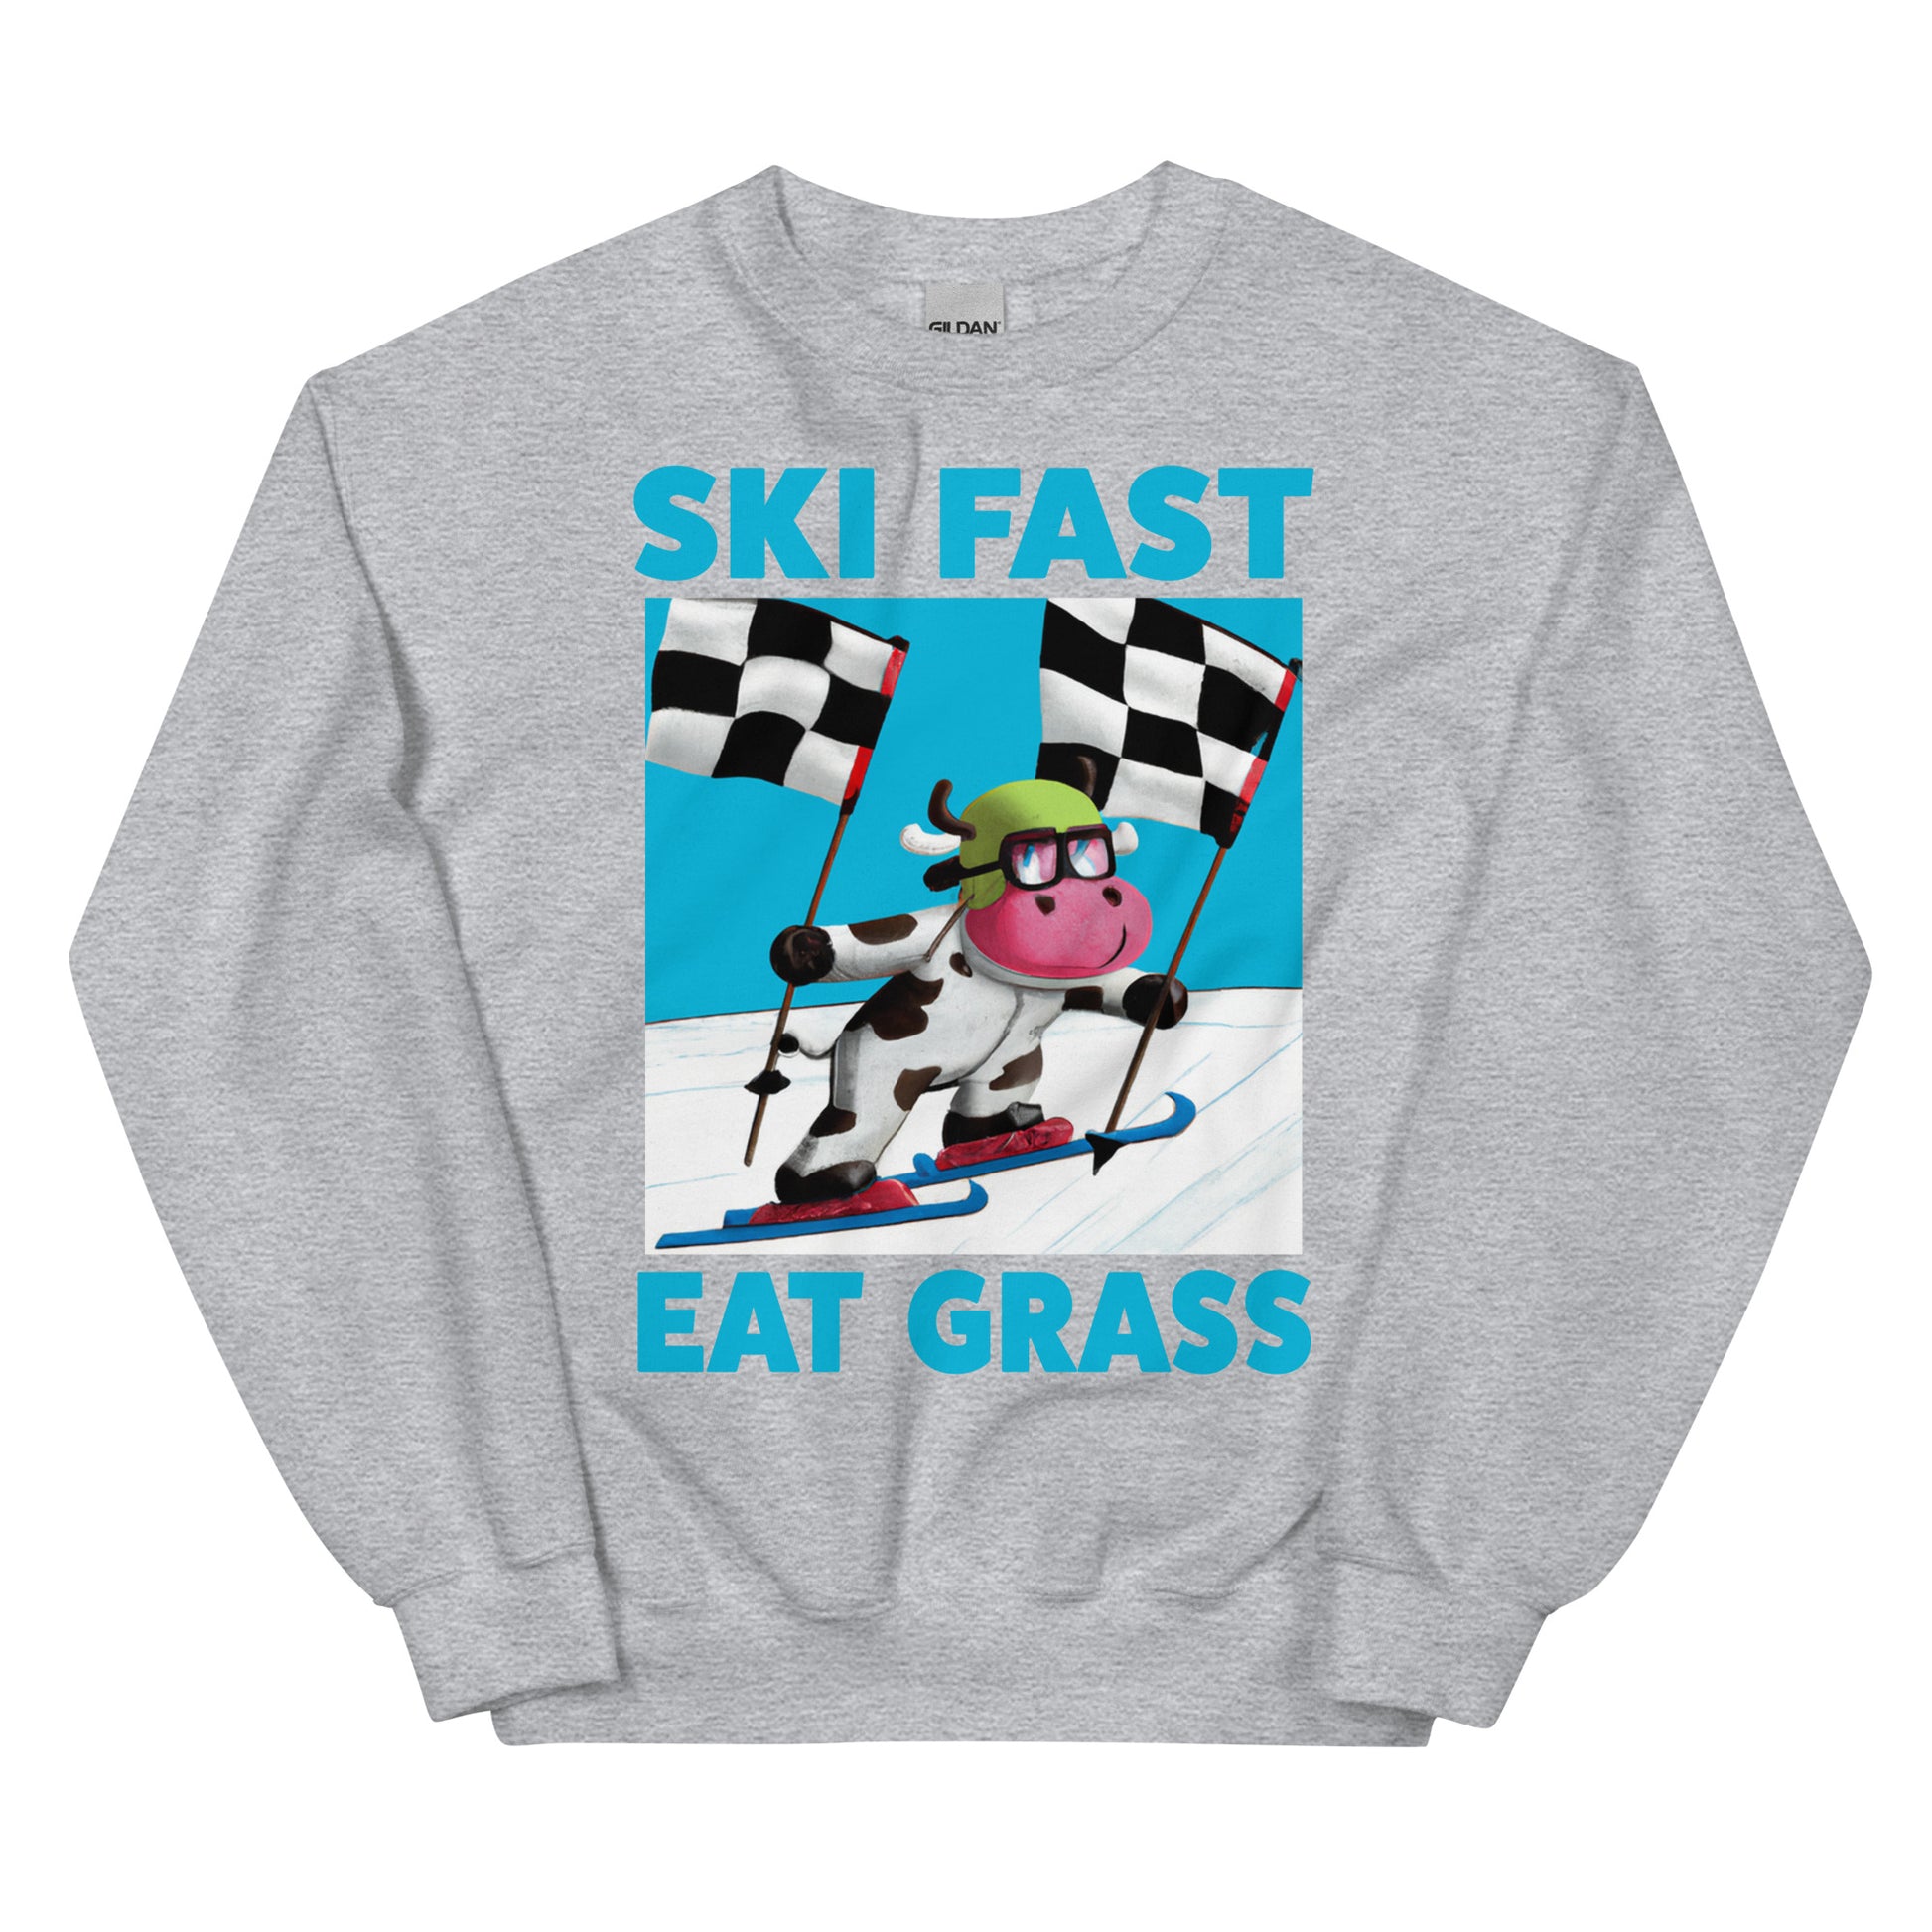 Ski fast eat grass cow skiing screen printed crewneck sweatshirt